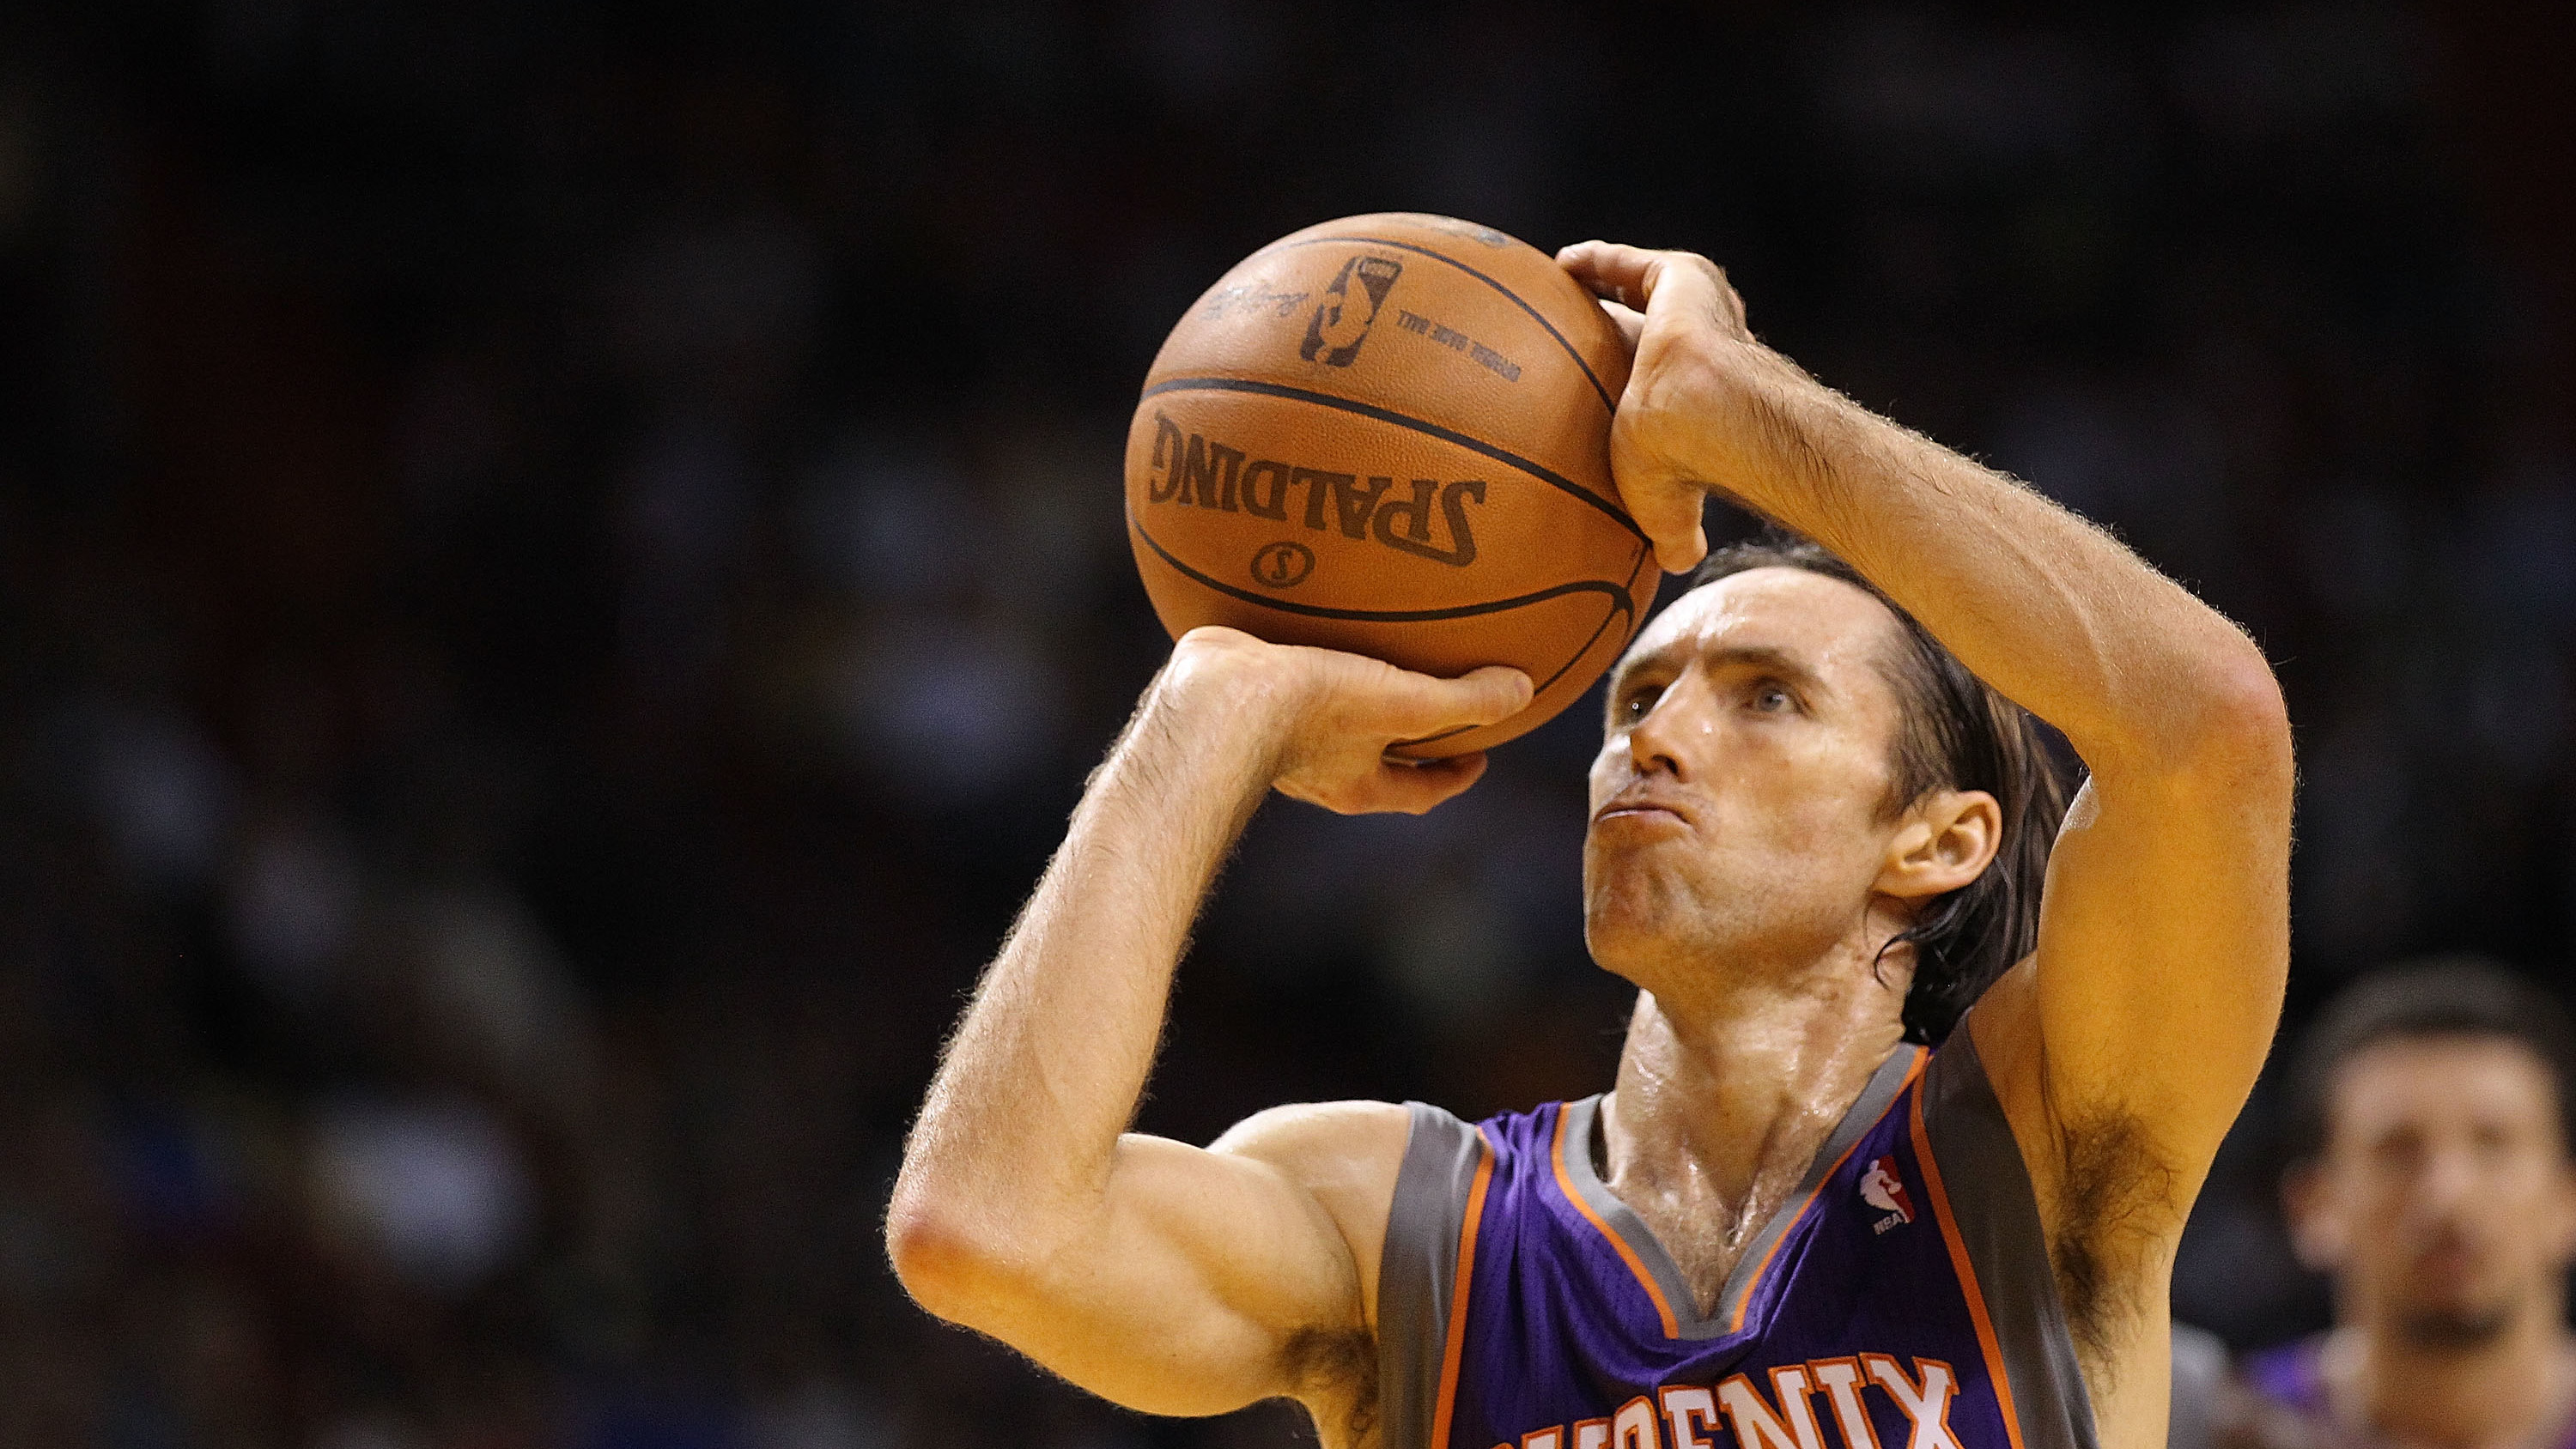 Steve Nash of the Phoenix Suns shooting a free throw